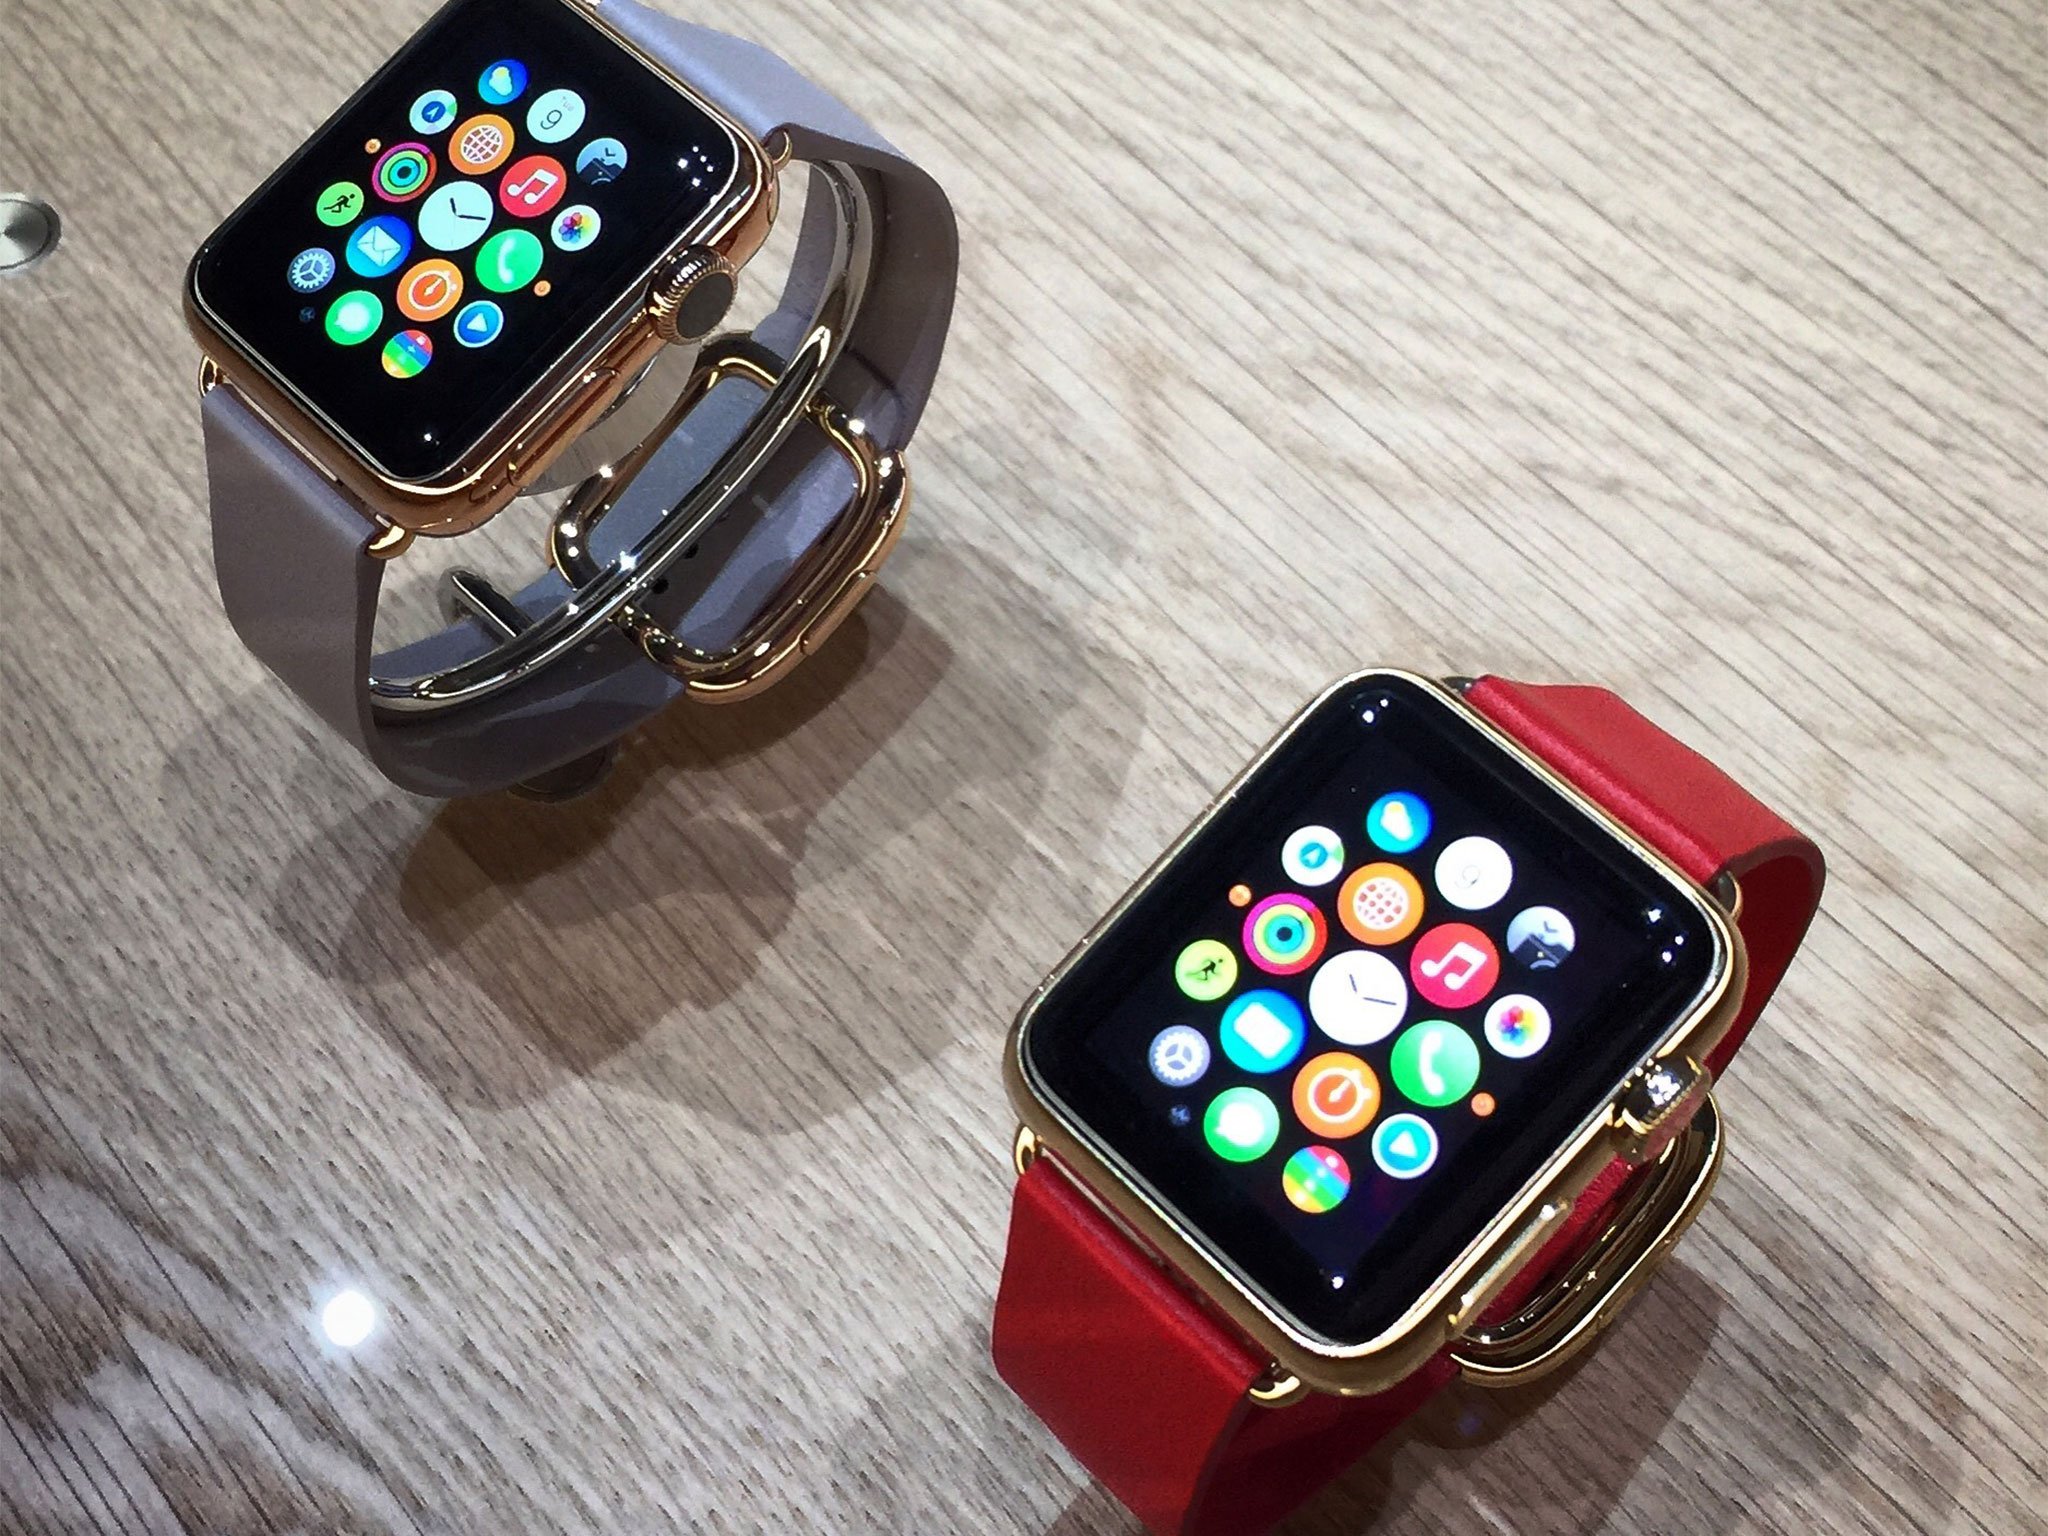 apple-watch-gold-gray-red-bands-hero.jpg